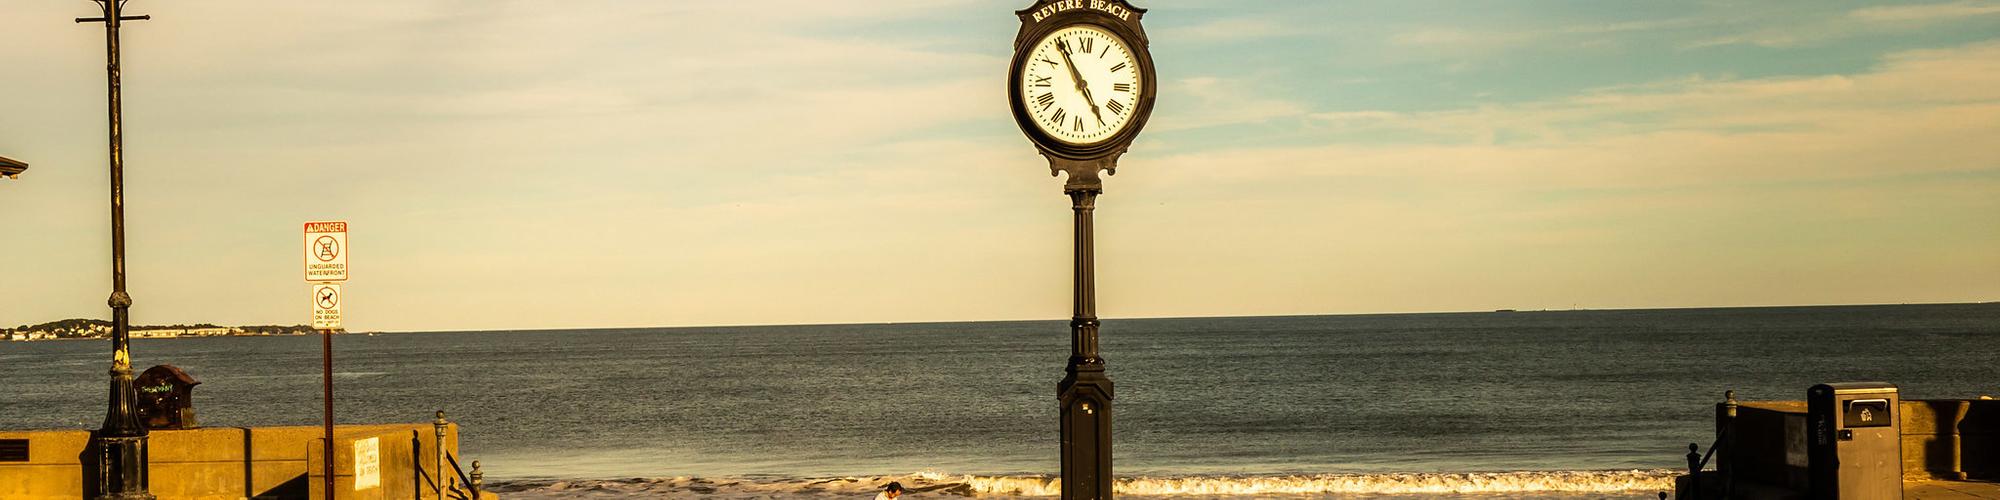 Revere Beach clock